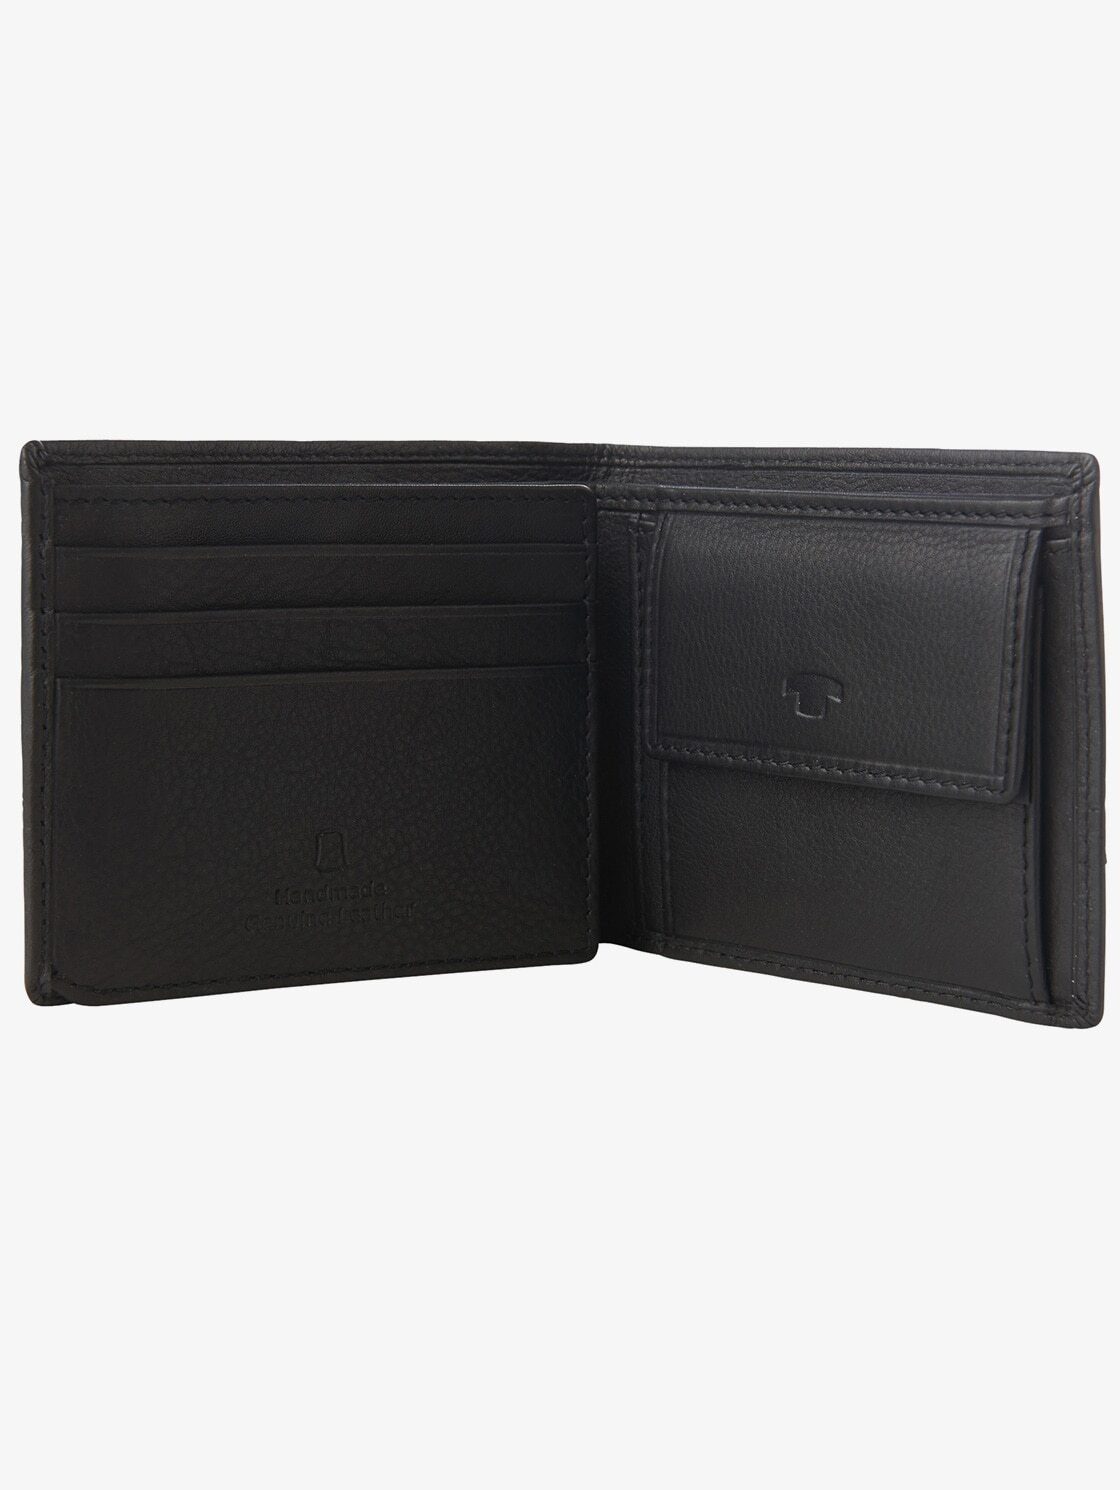 TOM TAILOR Geldbörse aus Leder Portemonnaie black / schwarz